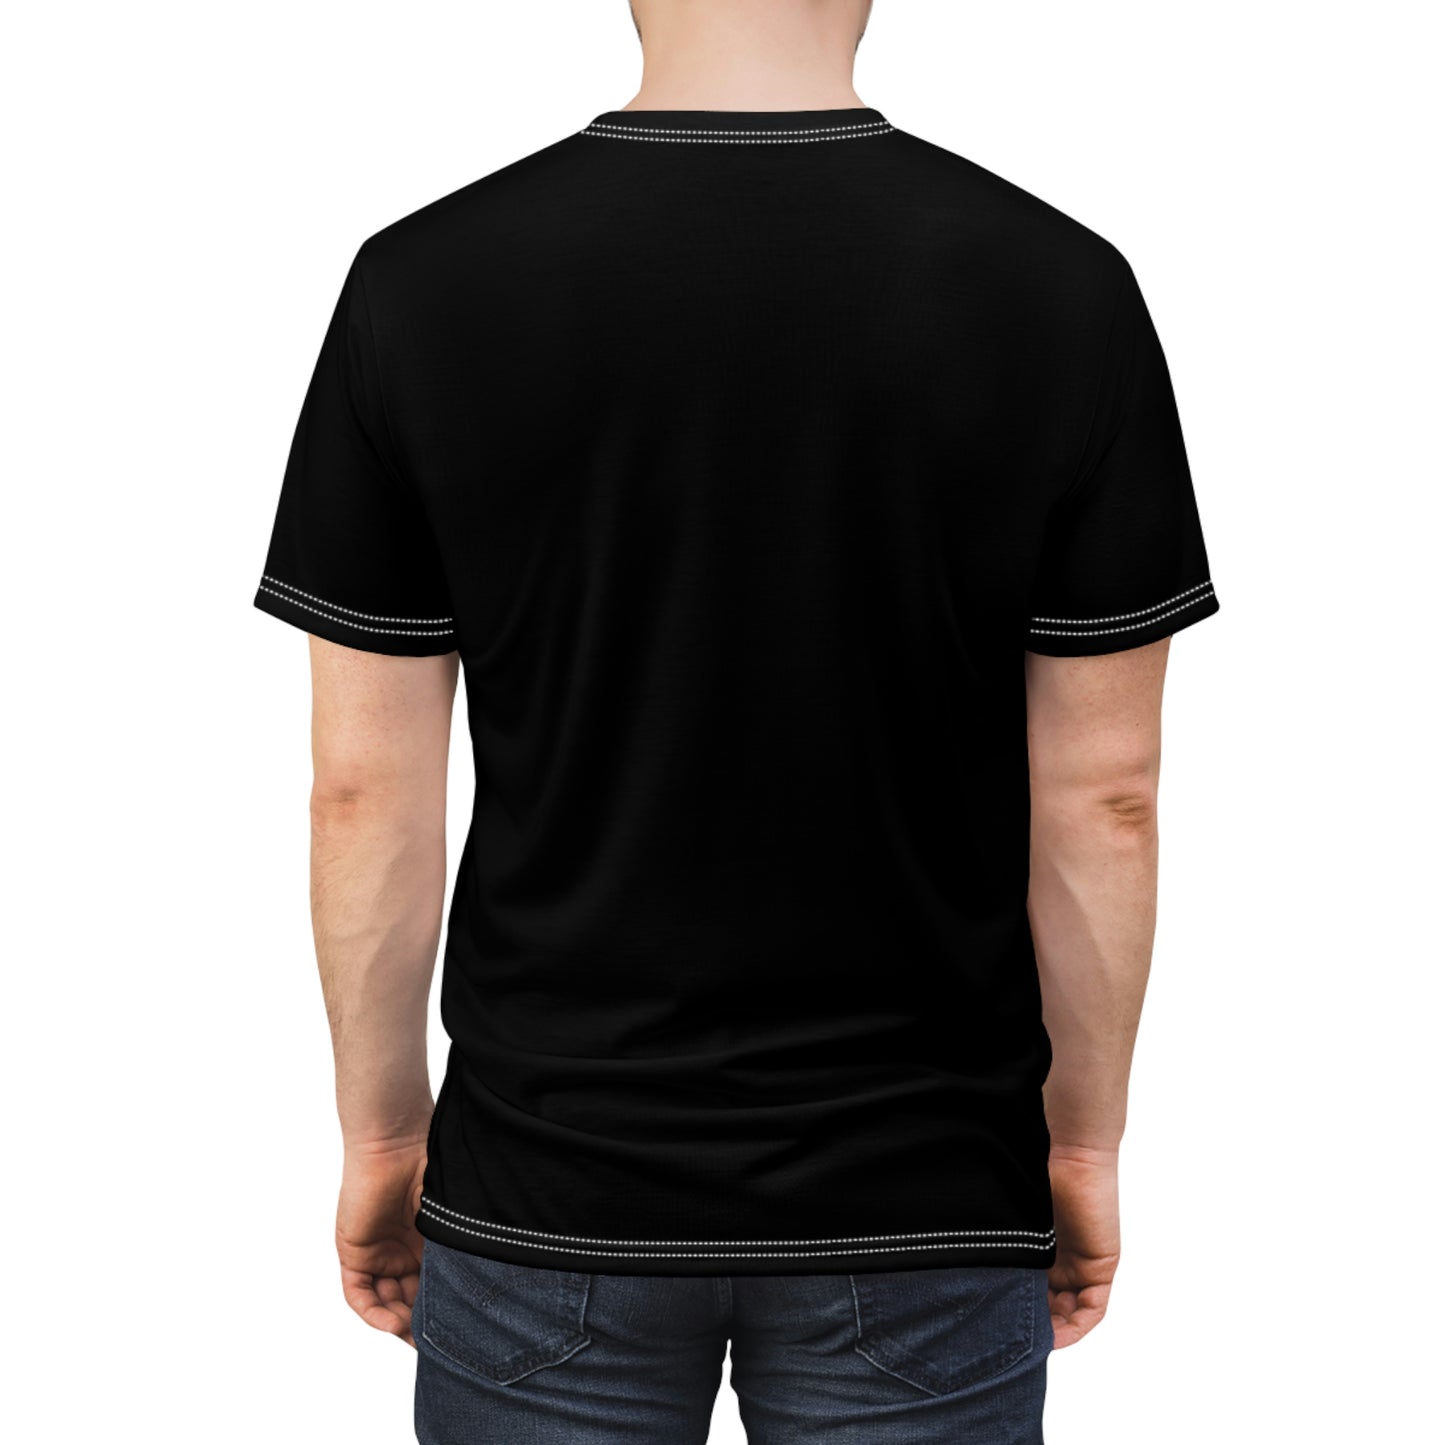 Blood Sport - Unisex All-Over Print Cut & Sew T-Shirt